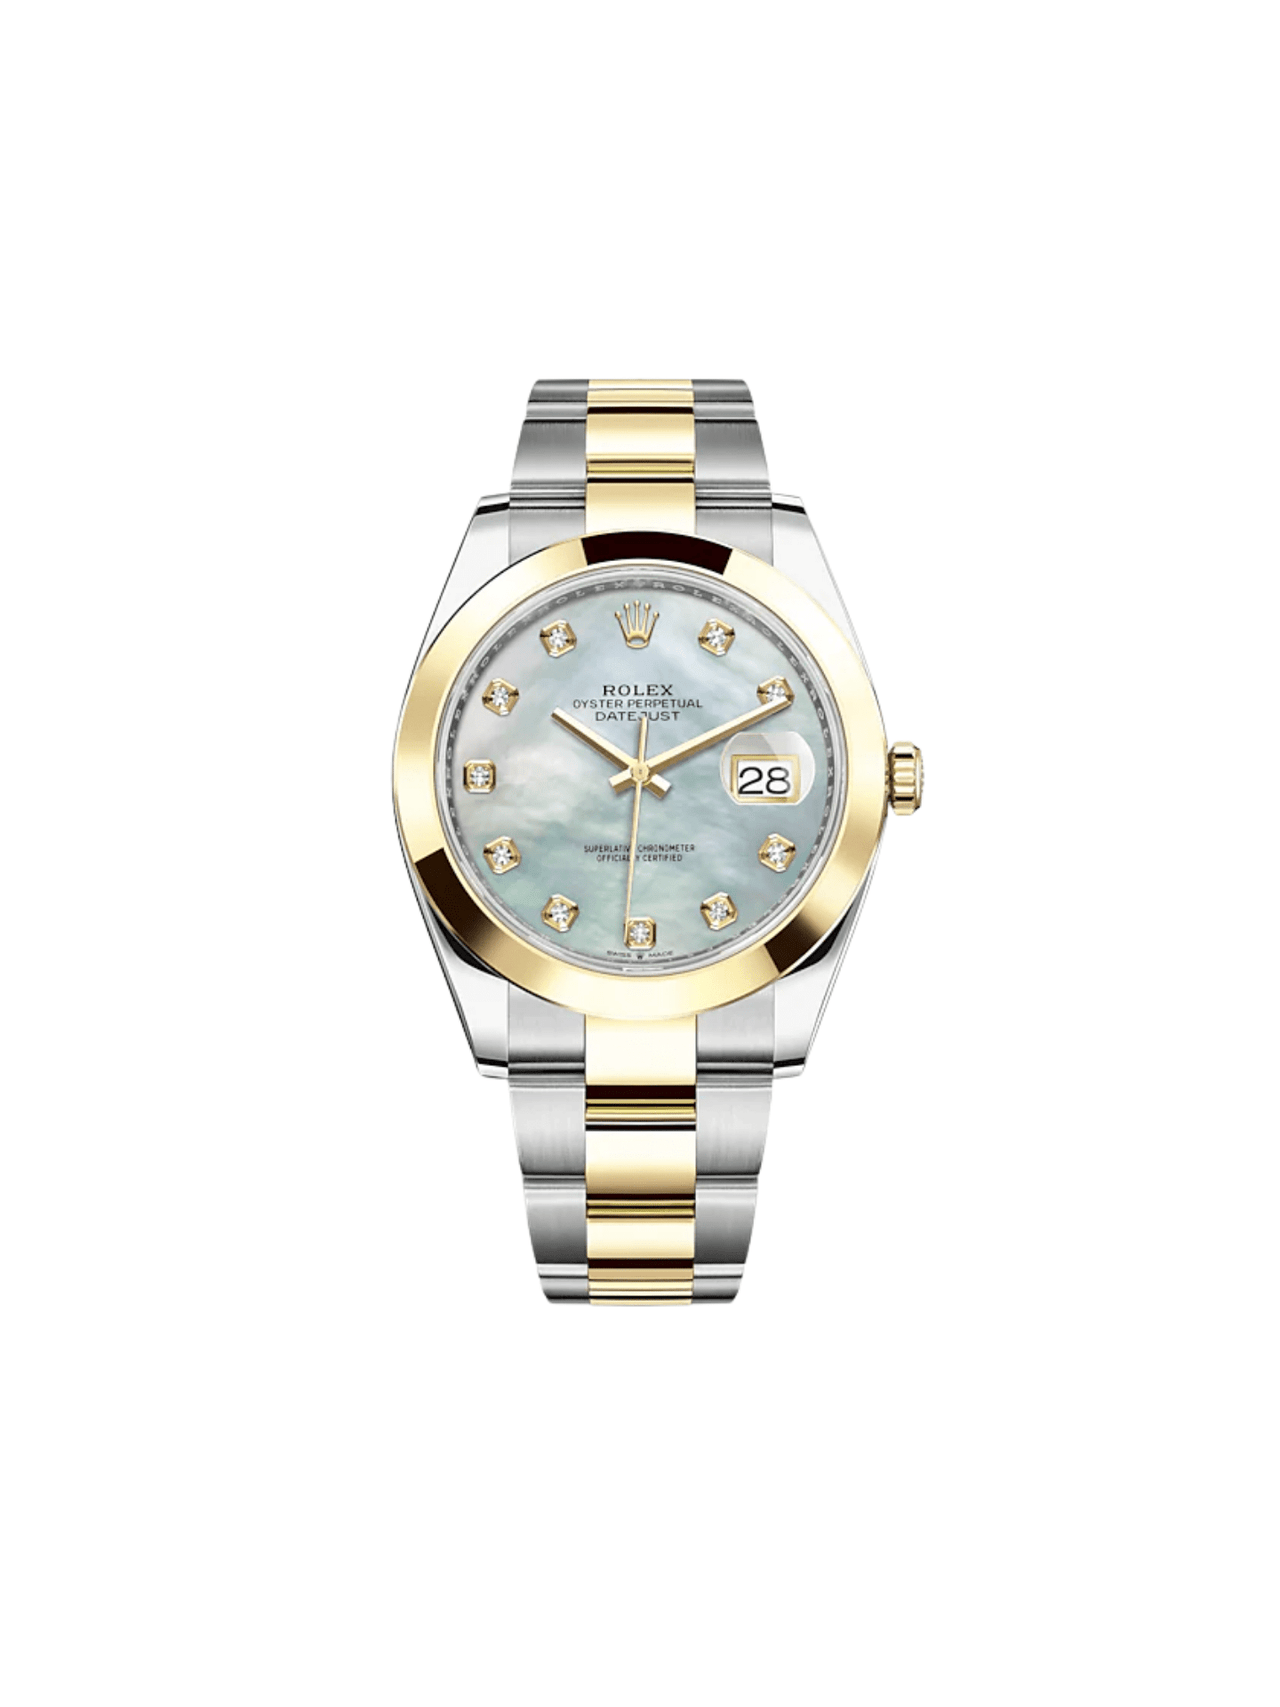 Luxury Watch Rolex Datejust 41 Yellow Gold & Stainless Steel MOP Diamond Dial 126303 Wrist Aficionado